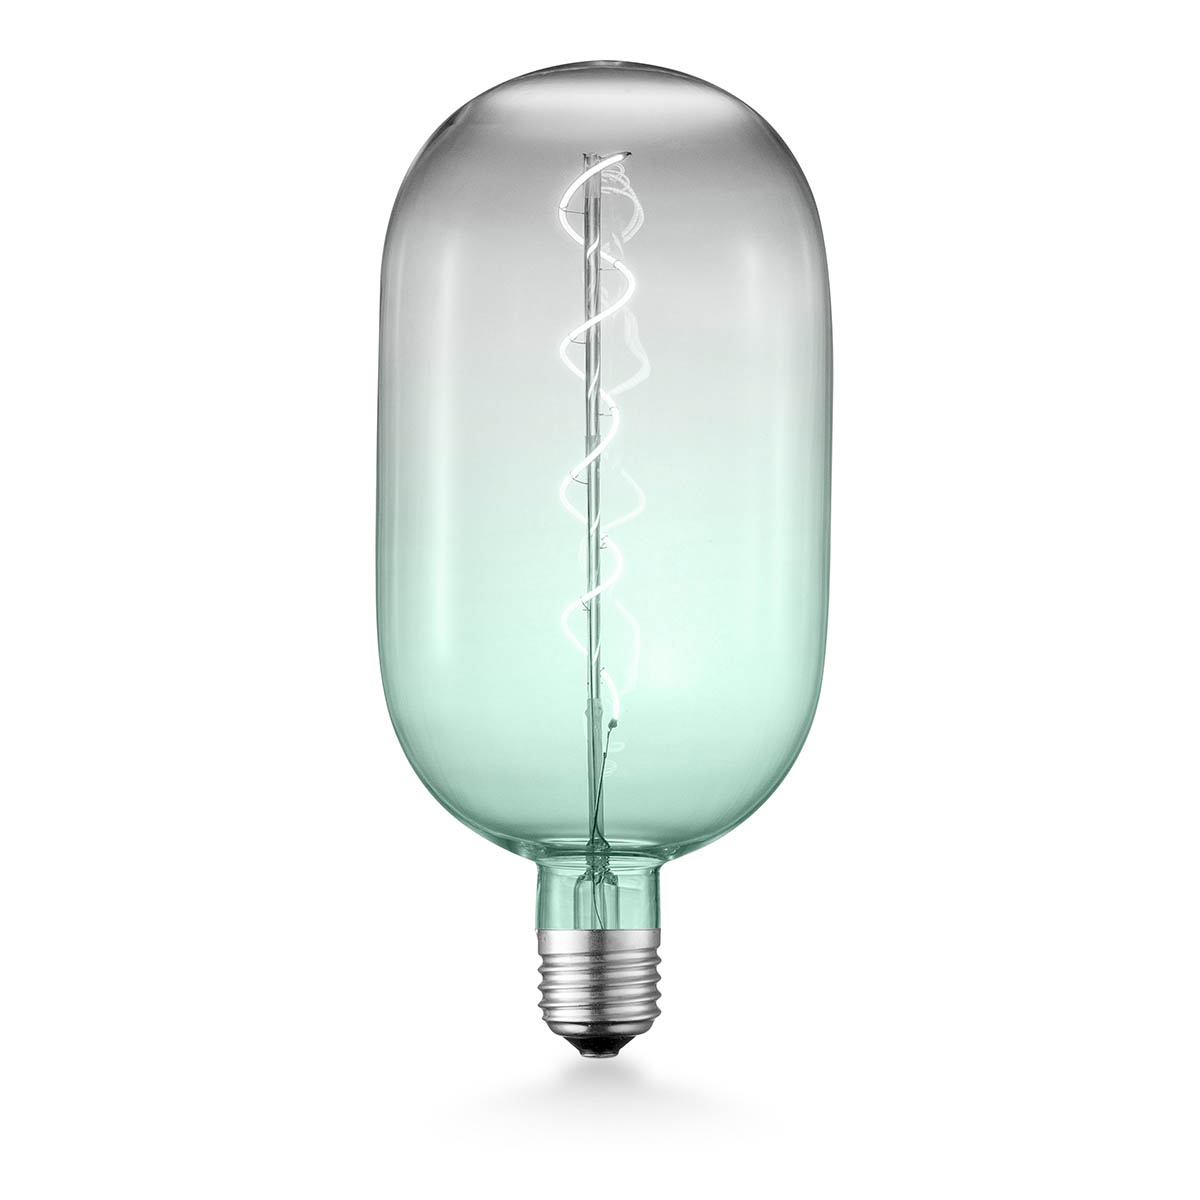 Tangla lighting - TLB-9001-04A - LED Light Bulb Single Spiral filament - 4W gradient color bulb - medium - green - non dimmable - E27